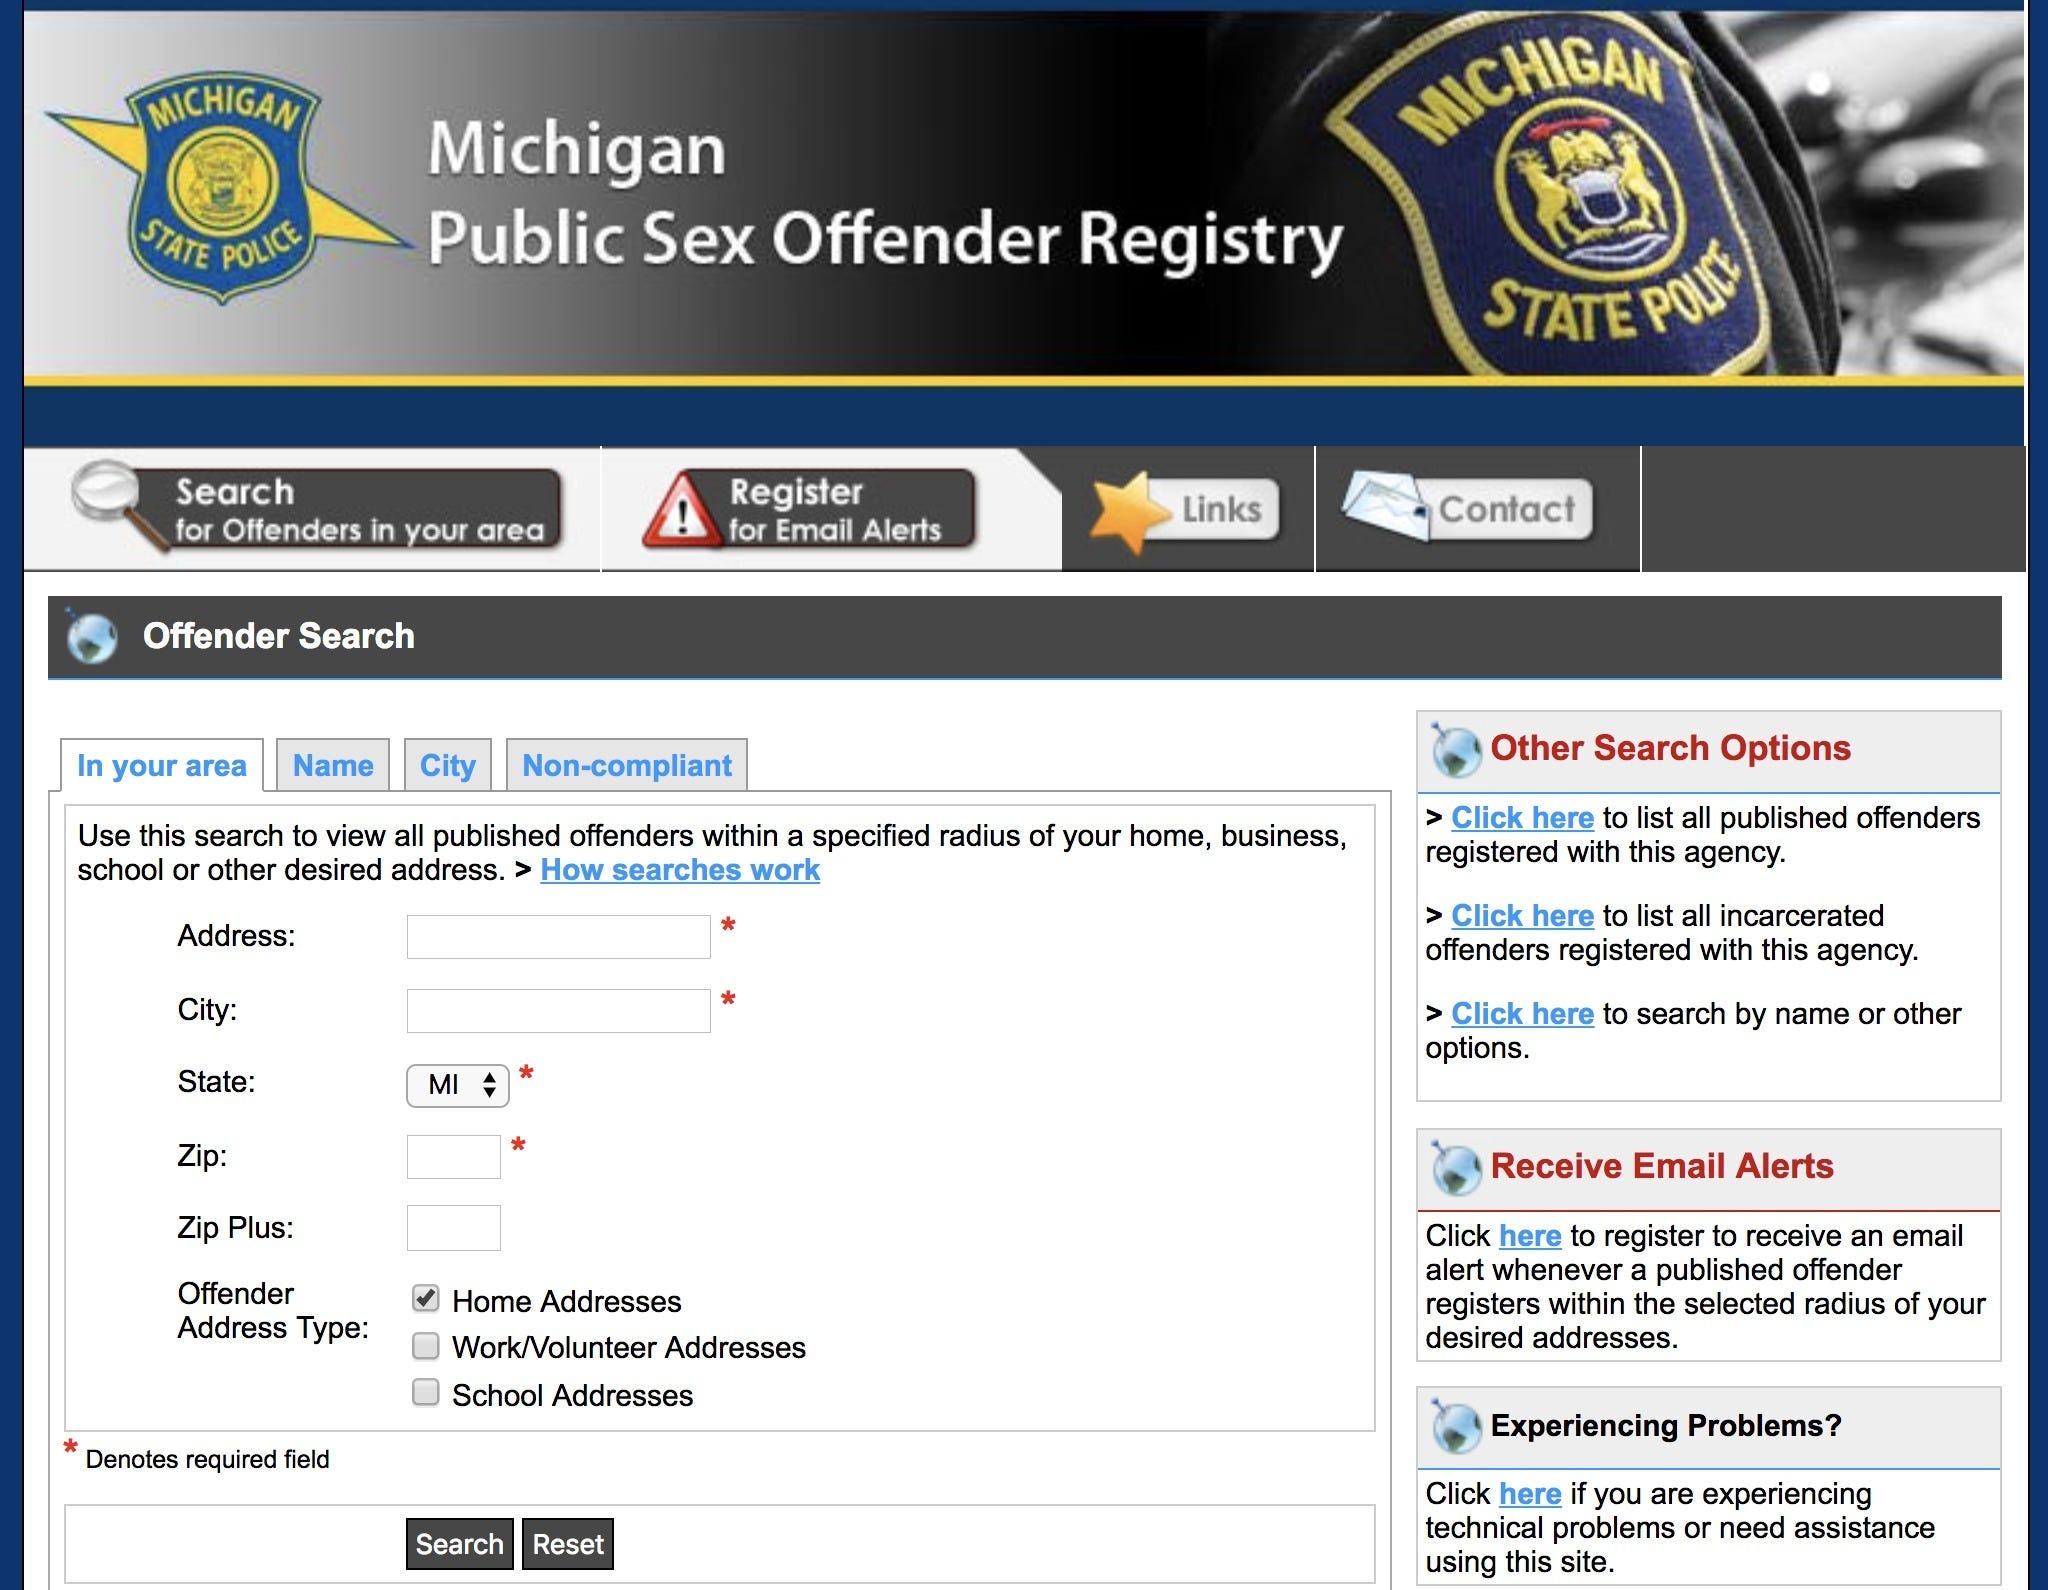 The Michigan Public Sex Offender Registry